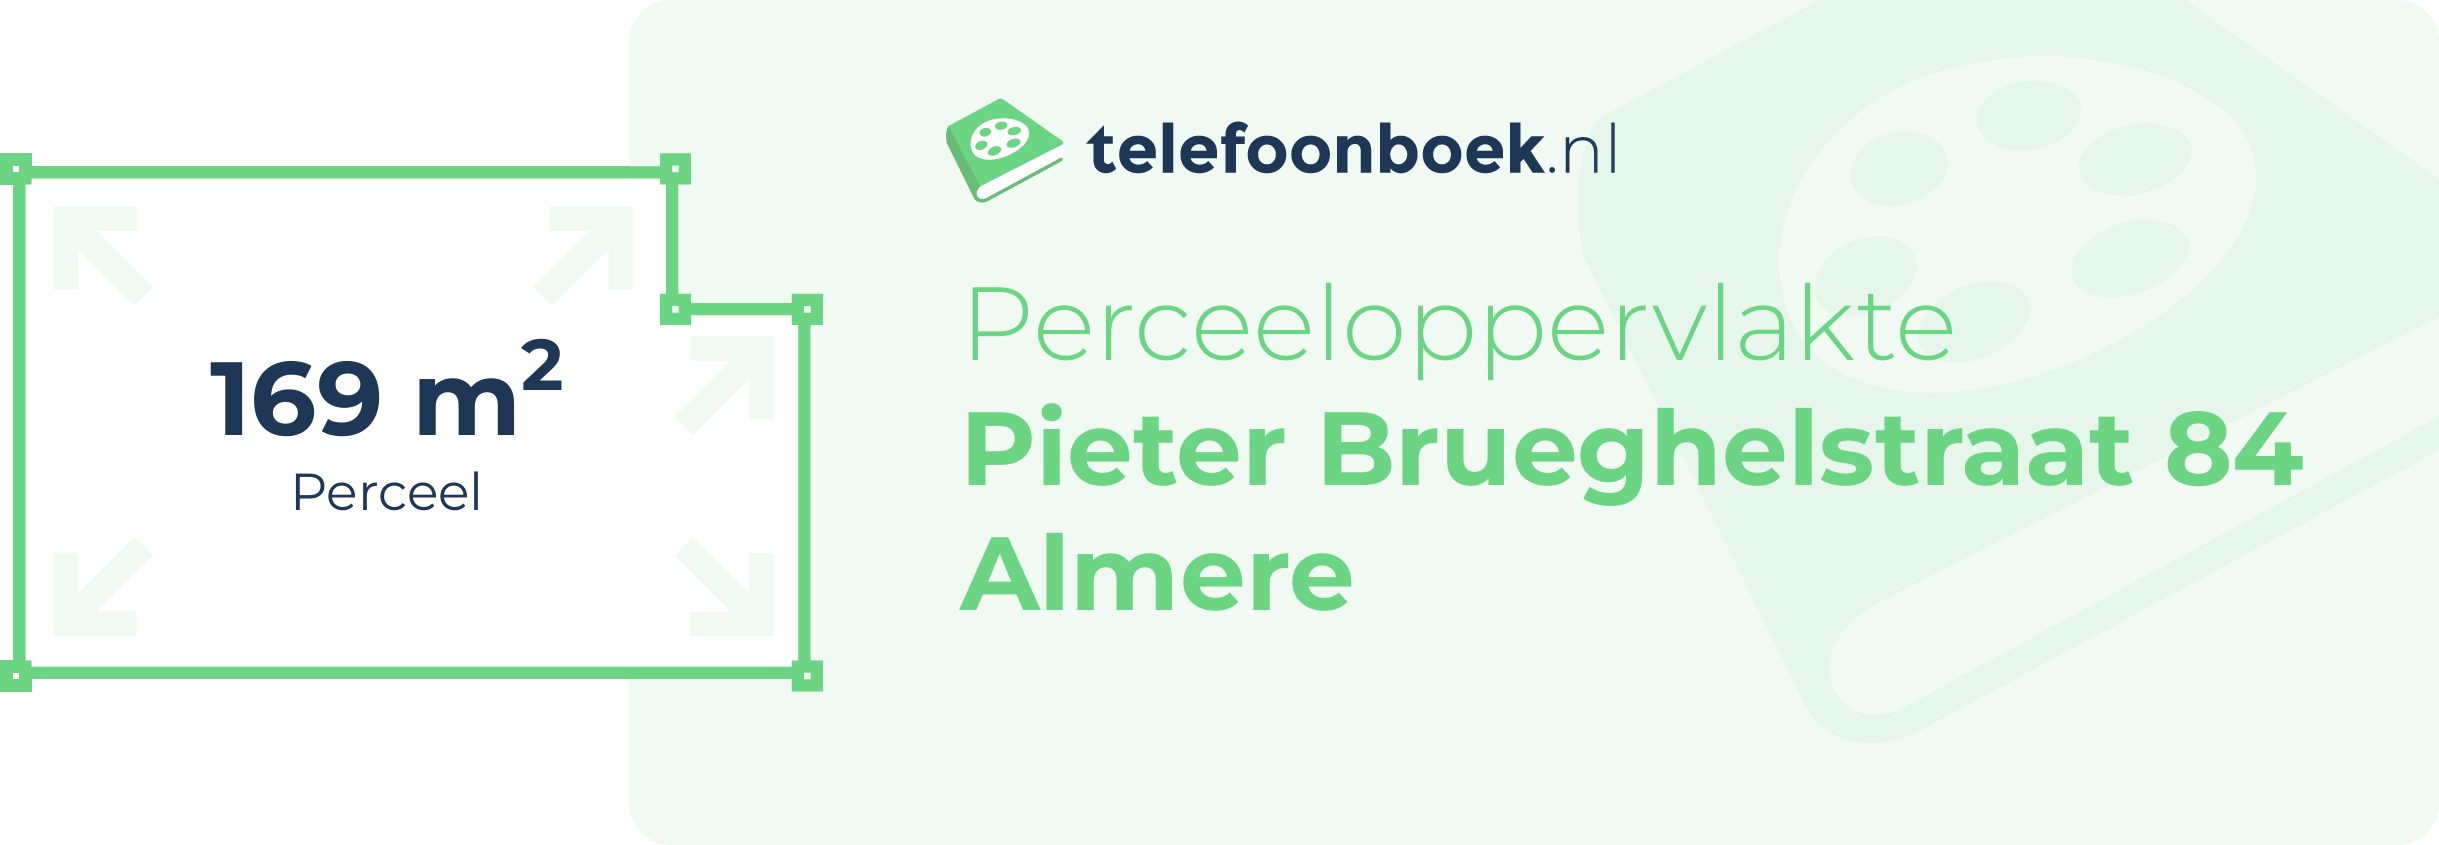 Perceeloppervlakte Pieter Brueghelstraat 84 Almere